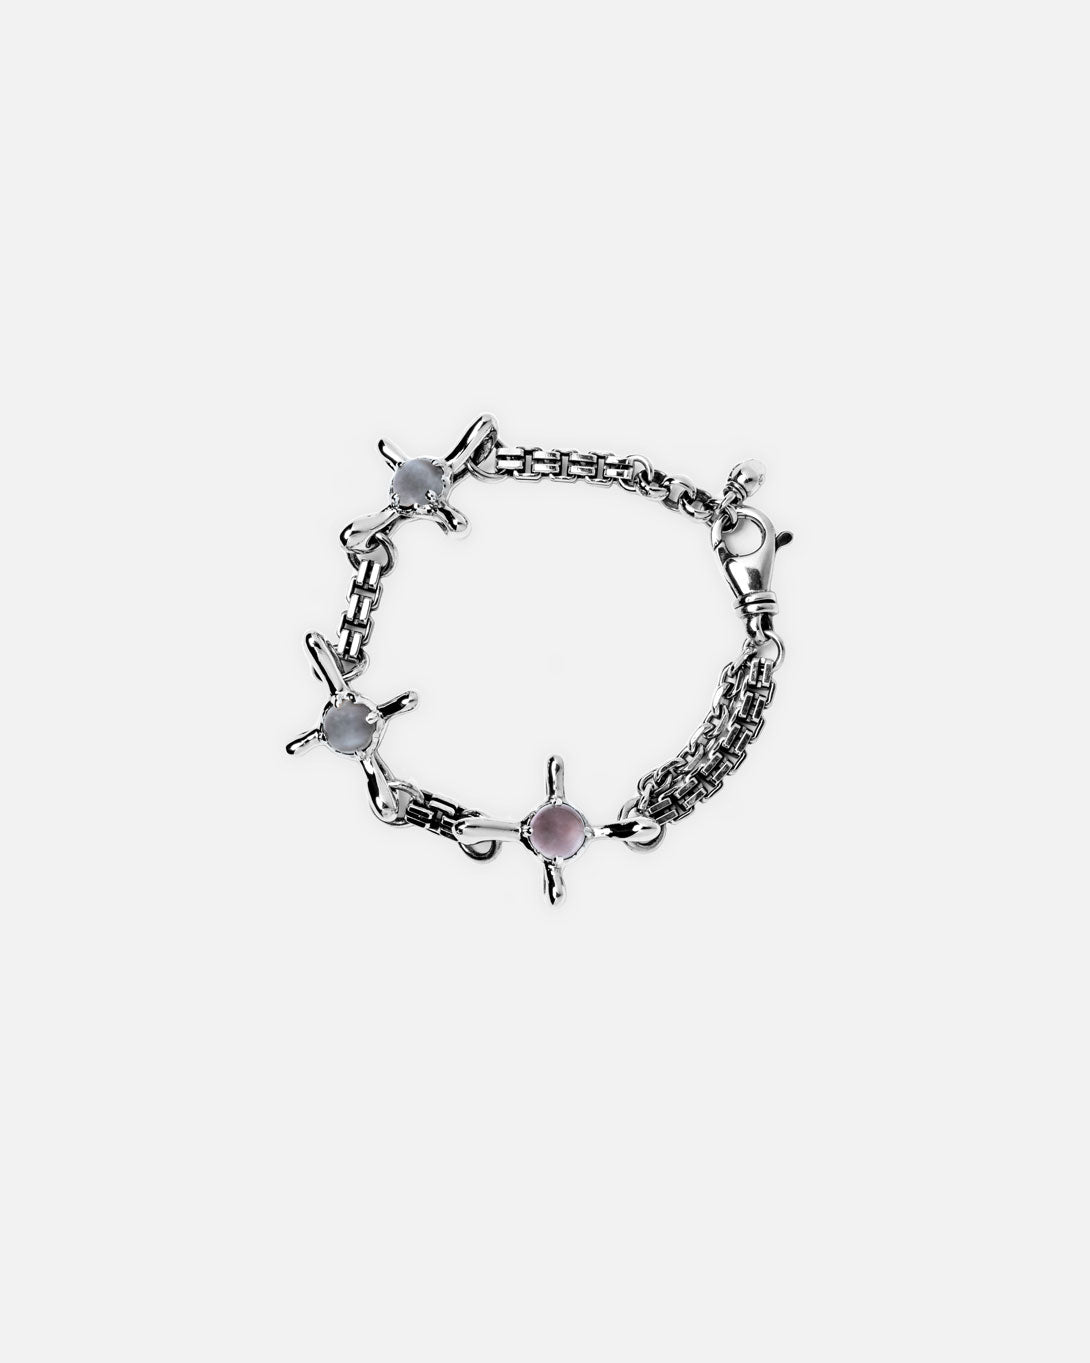 Exo 3 Bracelet - Jewelry - Tant D'Avenir - Elevastor